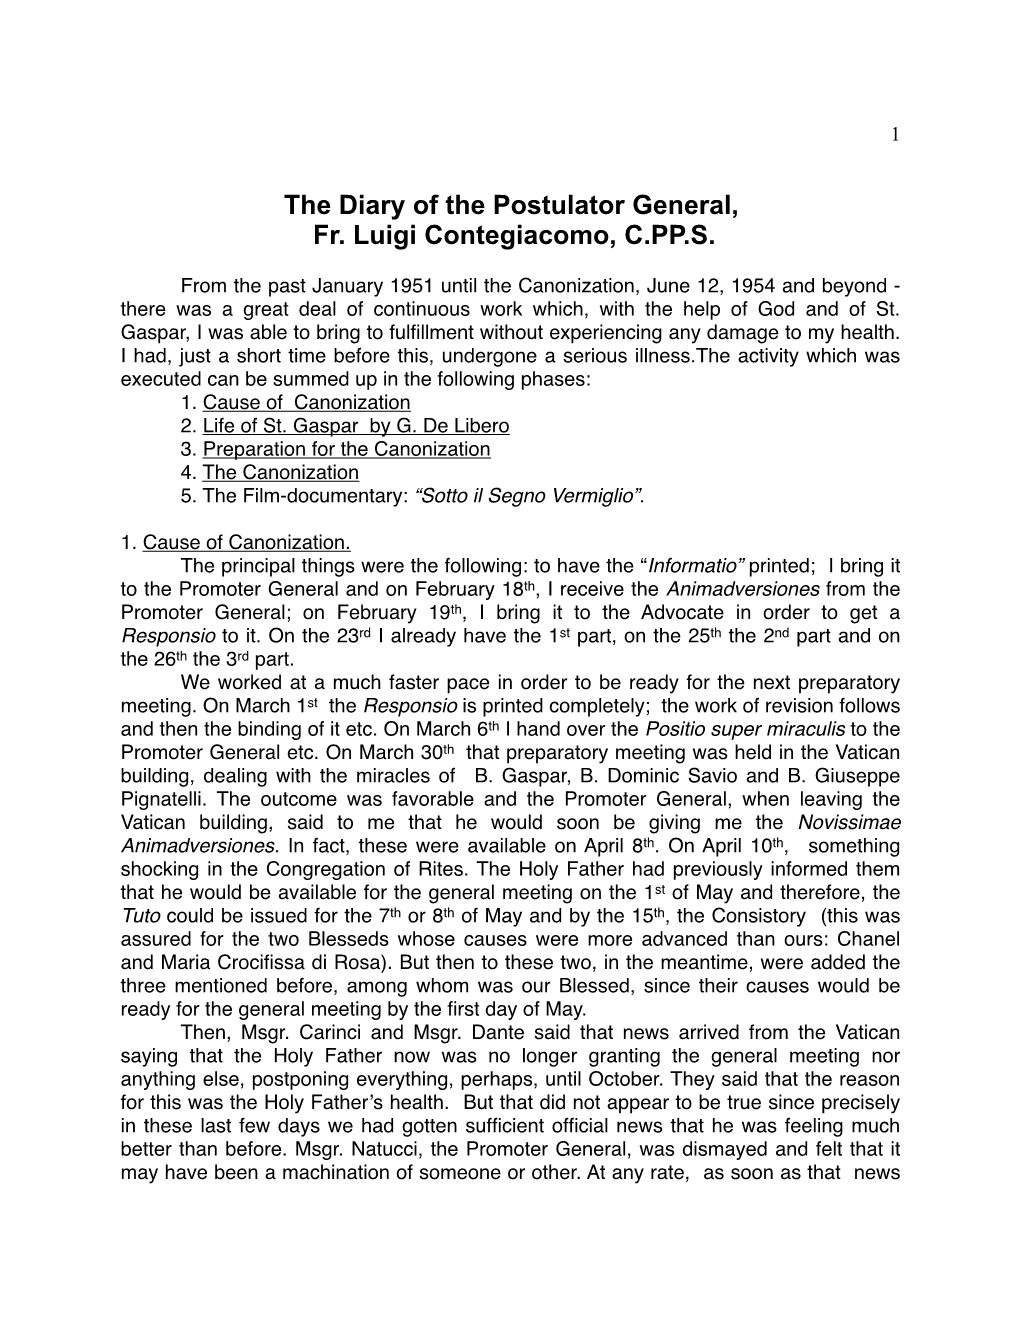 The Diary of the Postulator General, Fr. Luigi Contegiacomo, C.PP.S